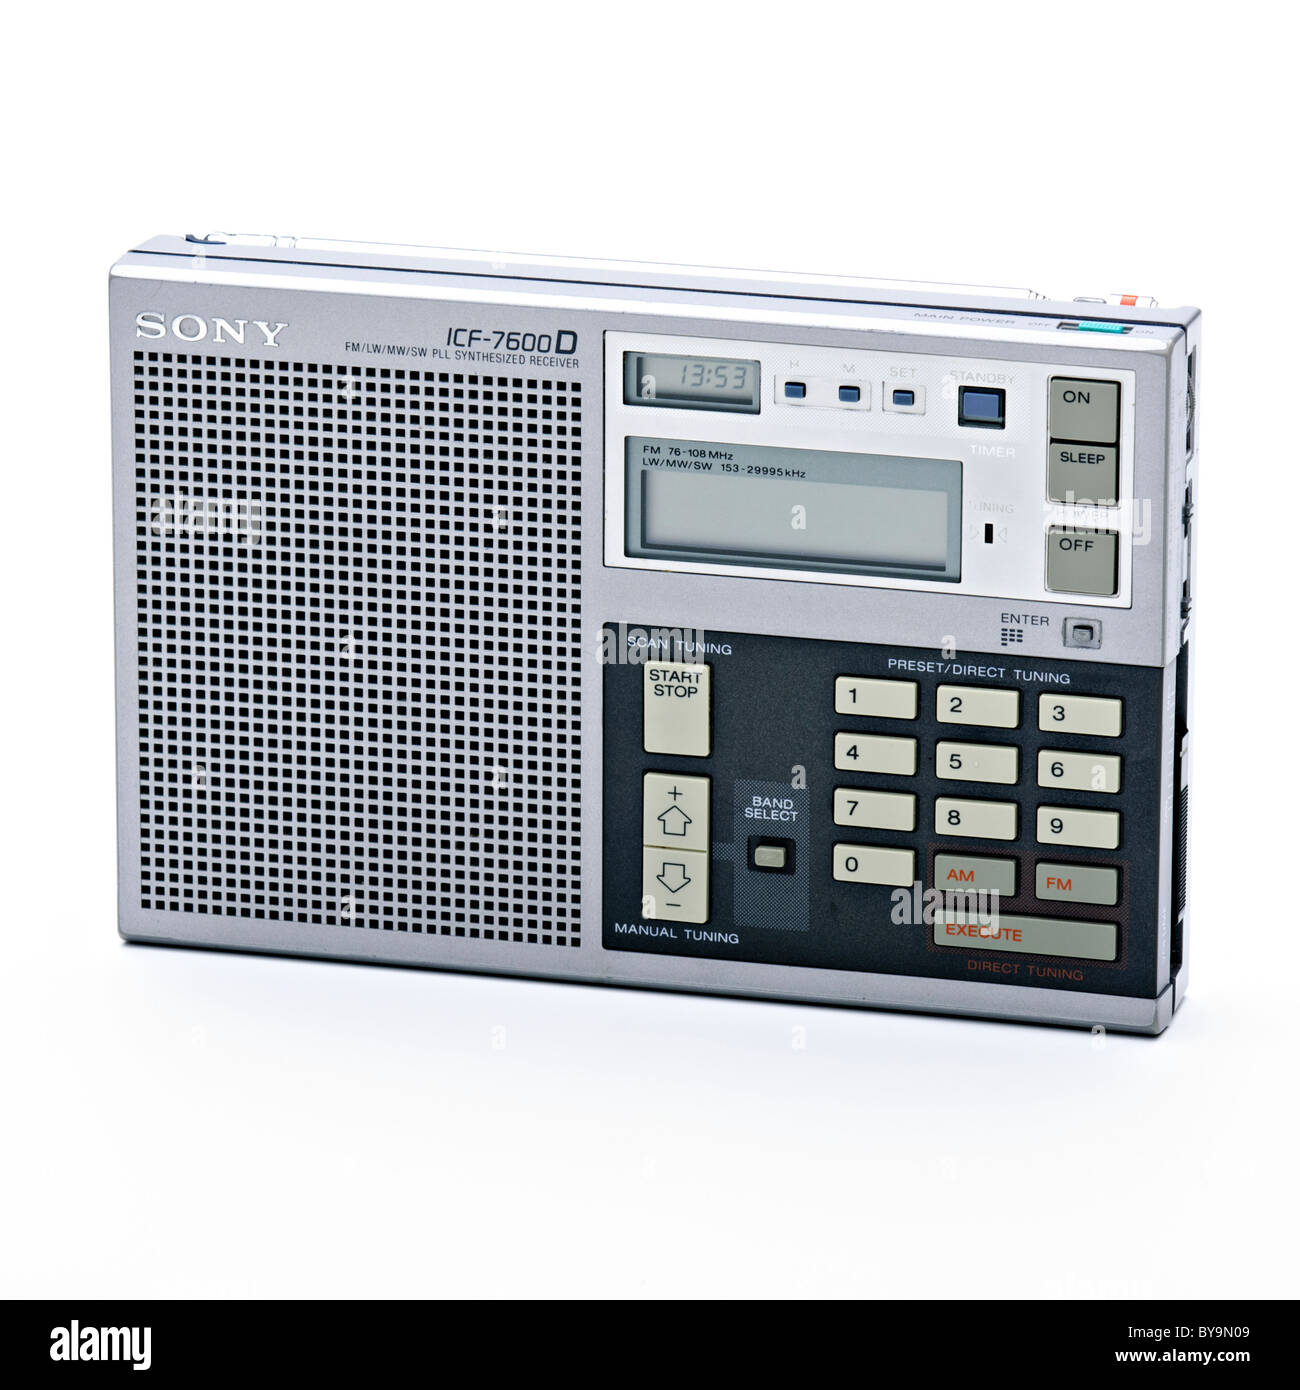 1984 1987 radio Sony ICF-7600D Photo Stock - Alamy